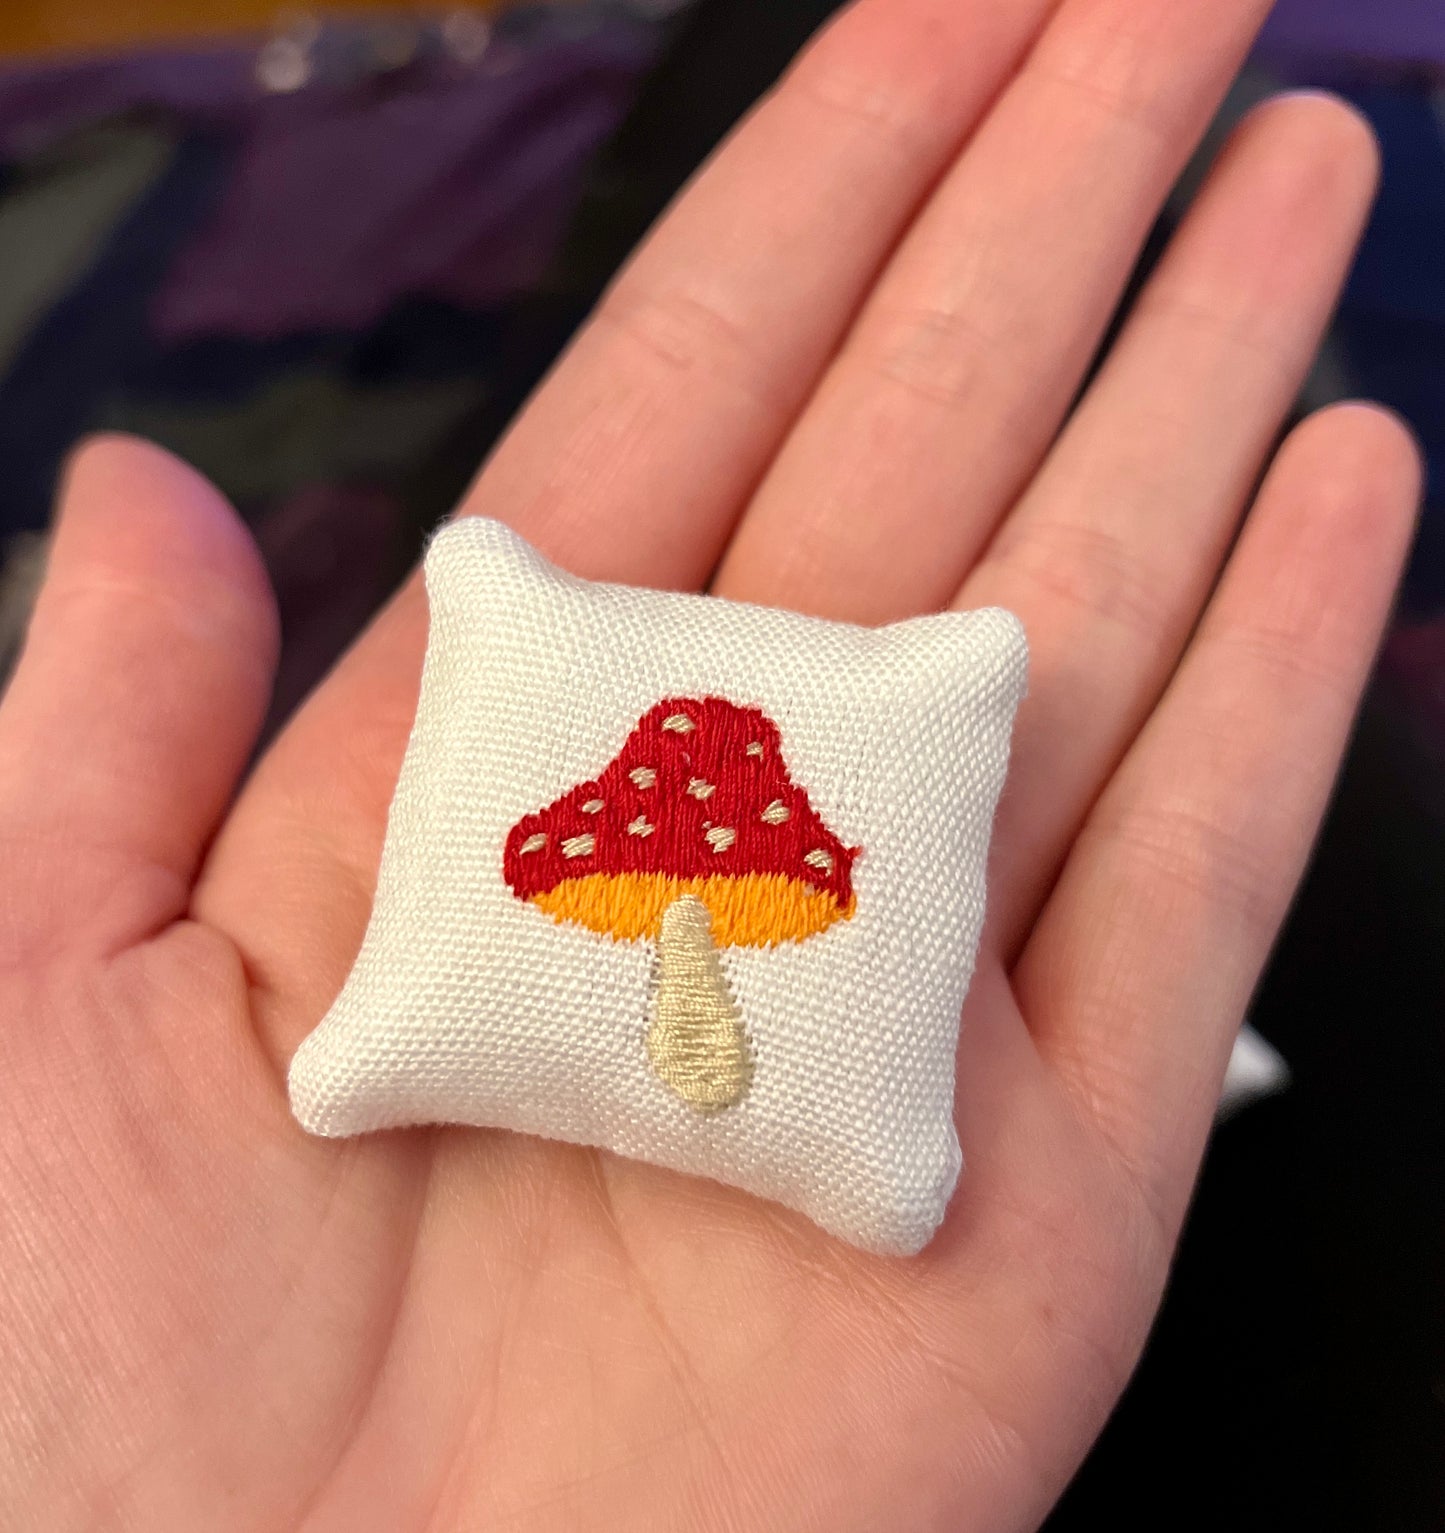 Dollhouse Pillows - Embroidered Miniature Throw Pillows 1:12 Scale